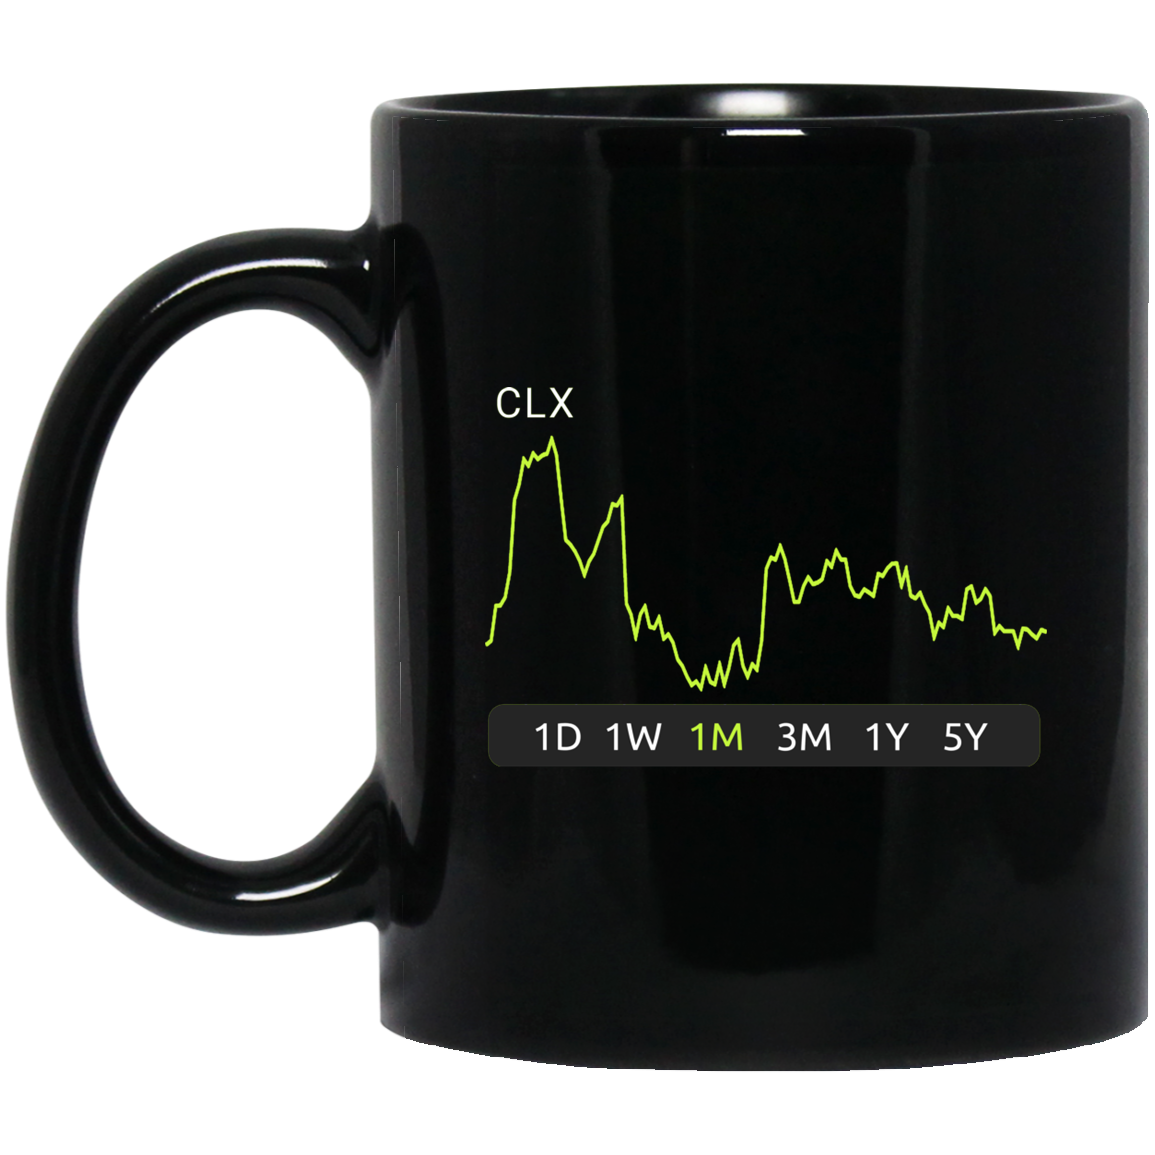 CLX Stock 1m Mug